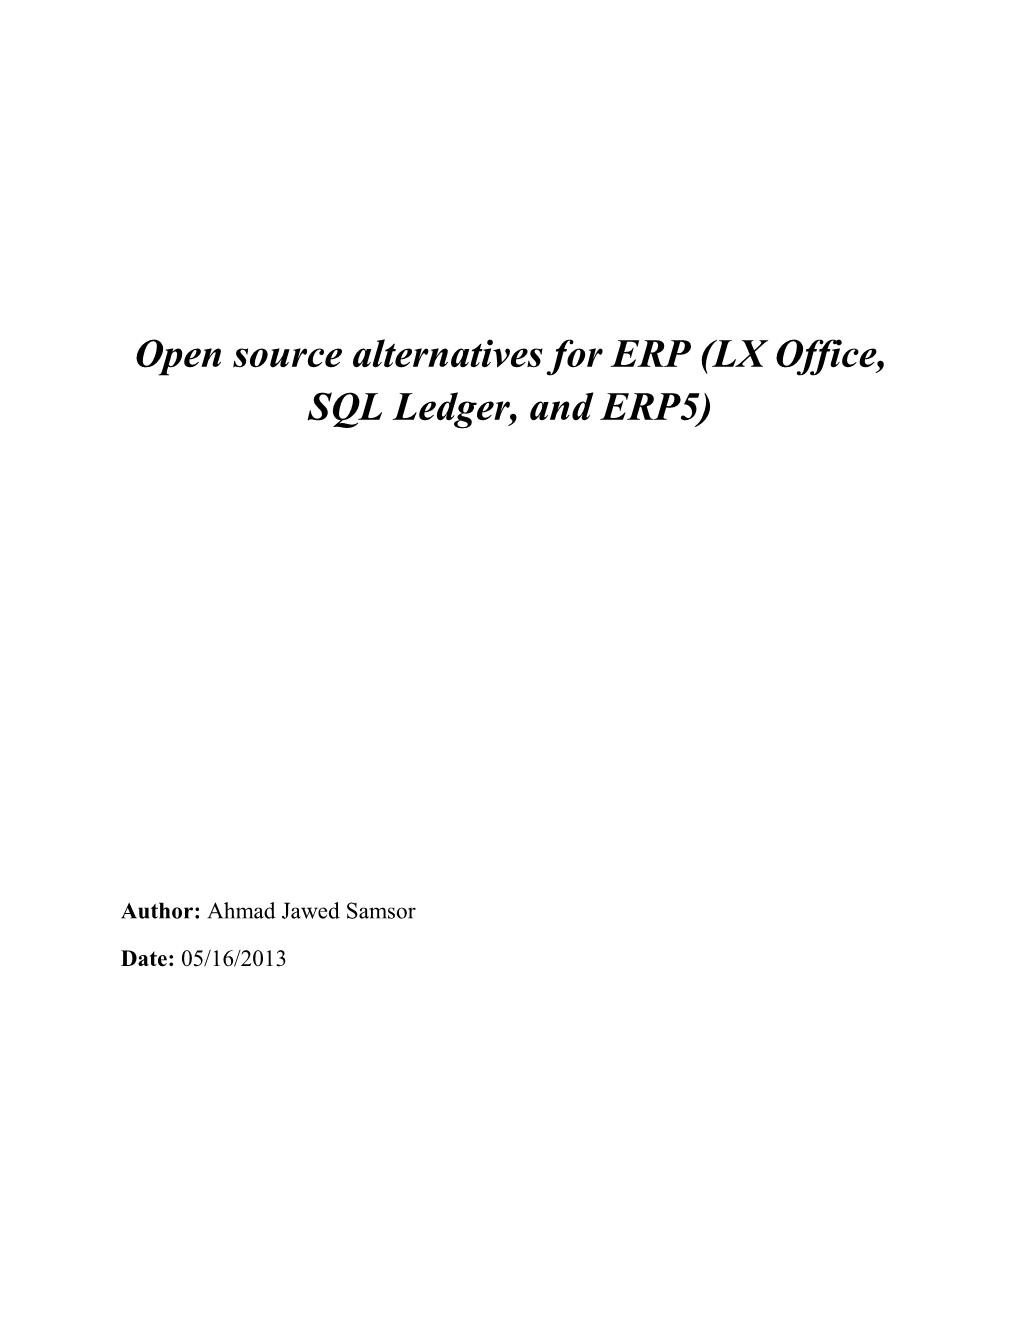 Open Source Alternatives for ERP (LX Office, SQL Ledger, and ERP5)